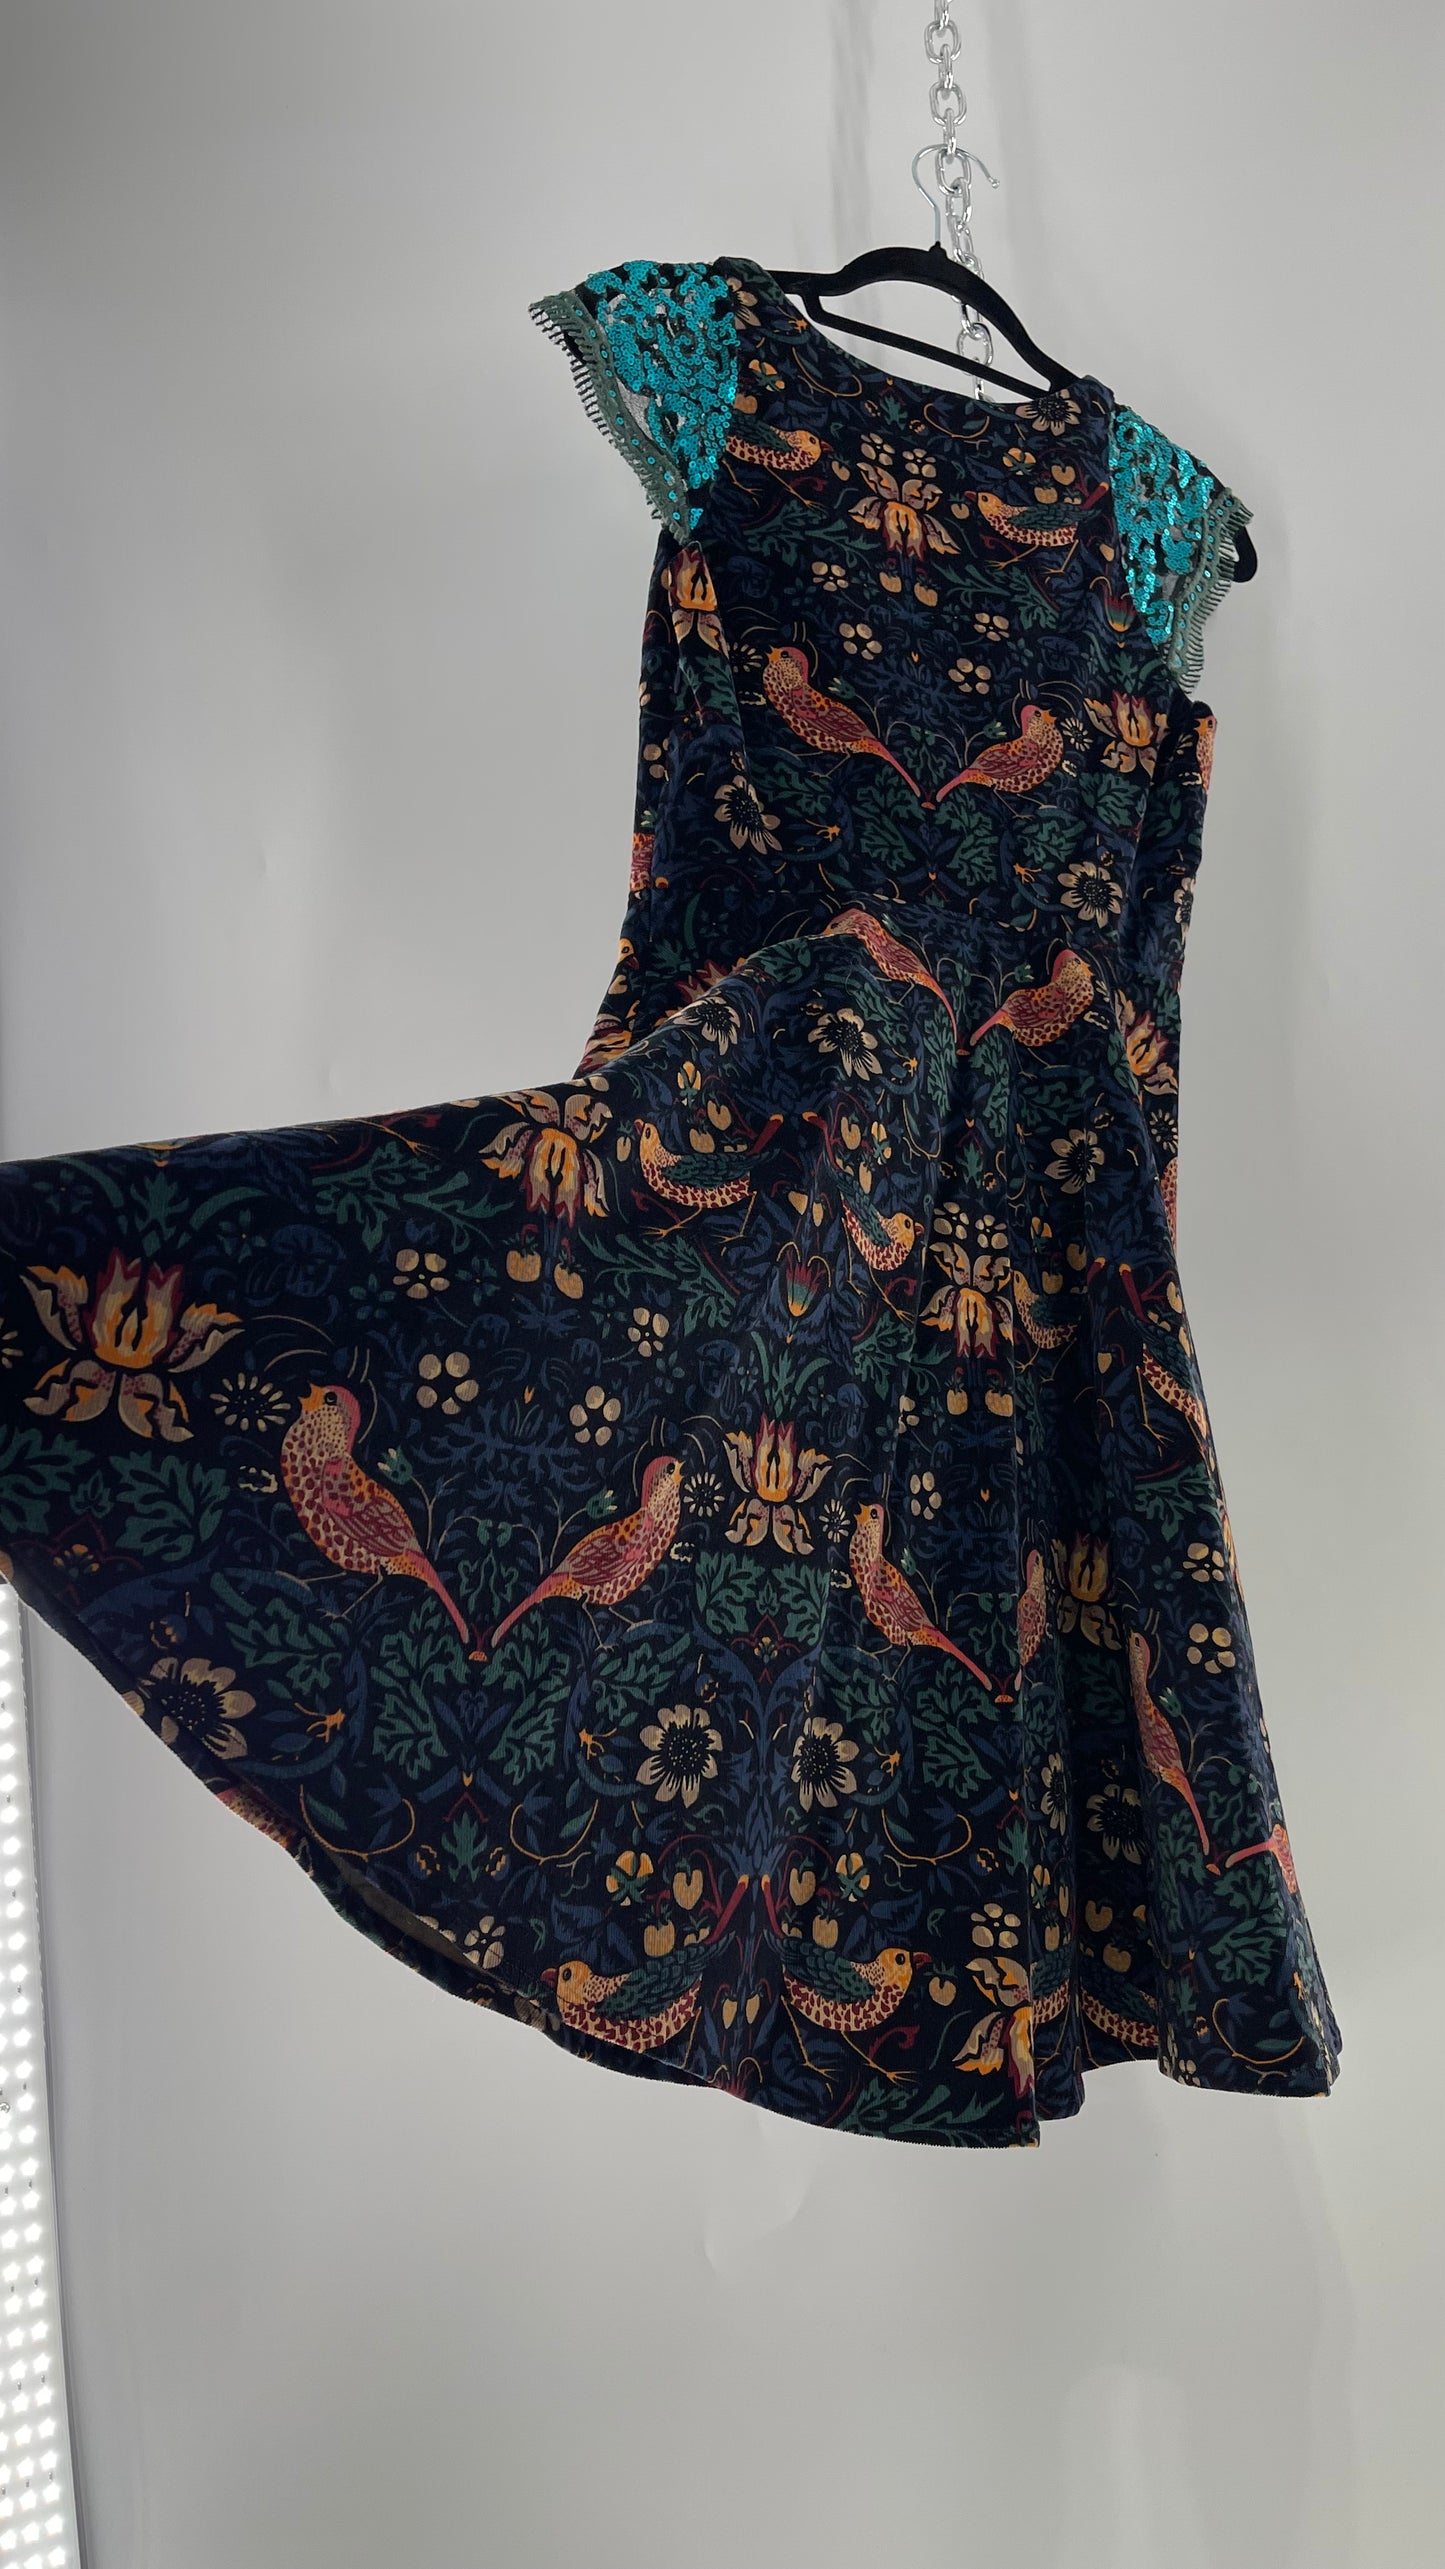 Anthropologie Eva Franco Corduroy Floral Bird Tapestry Print Dress with Sequin Cap Sleeves (4)